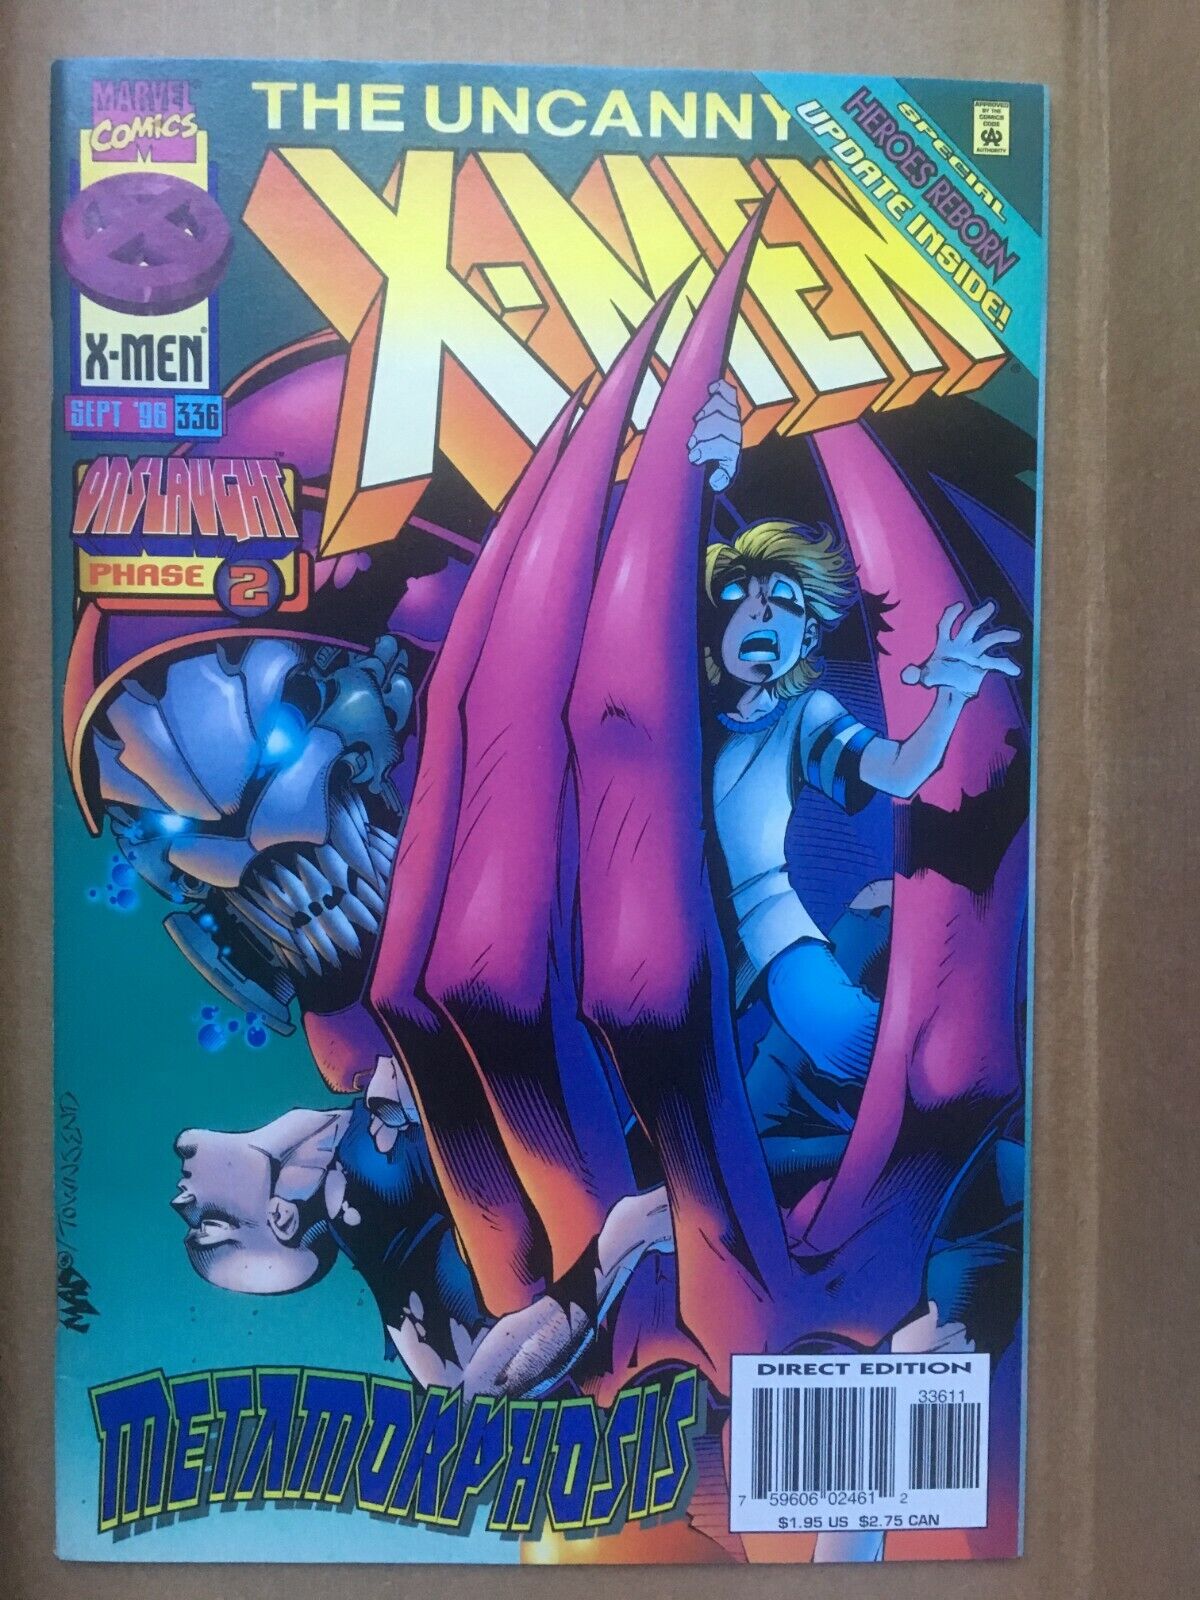 Uncanny X-Men #336 - Onslaught Phase Two - Marvel (Sept. 1996)